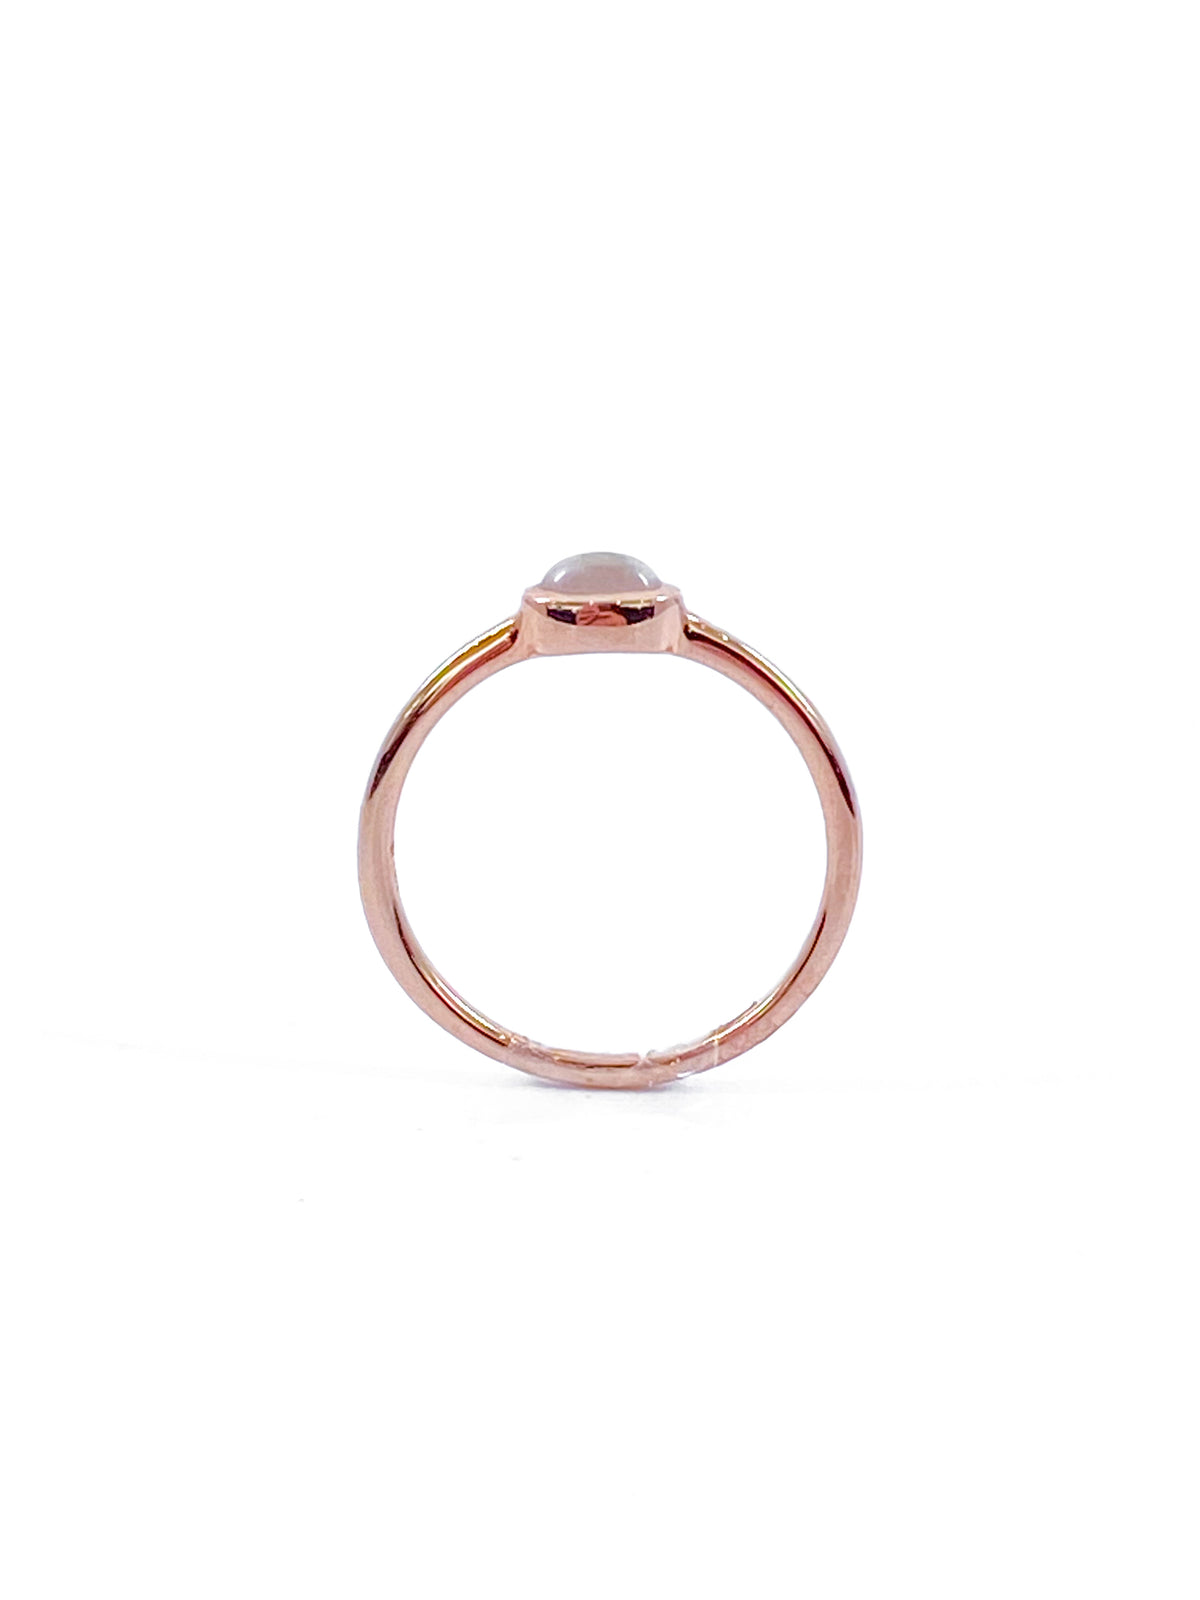 10K Rose Gold 0.25cttw Genuine Moonstone Ring, size 6.5